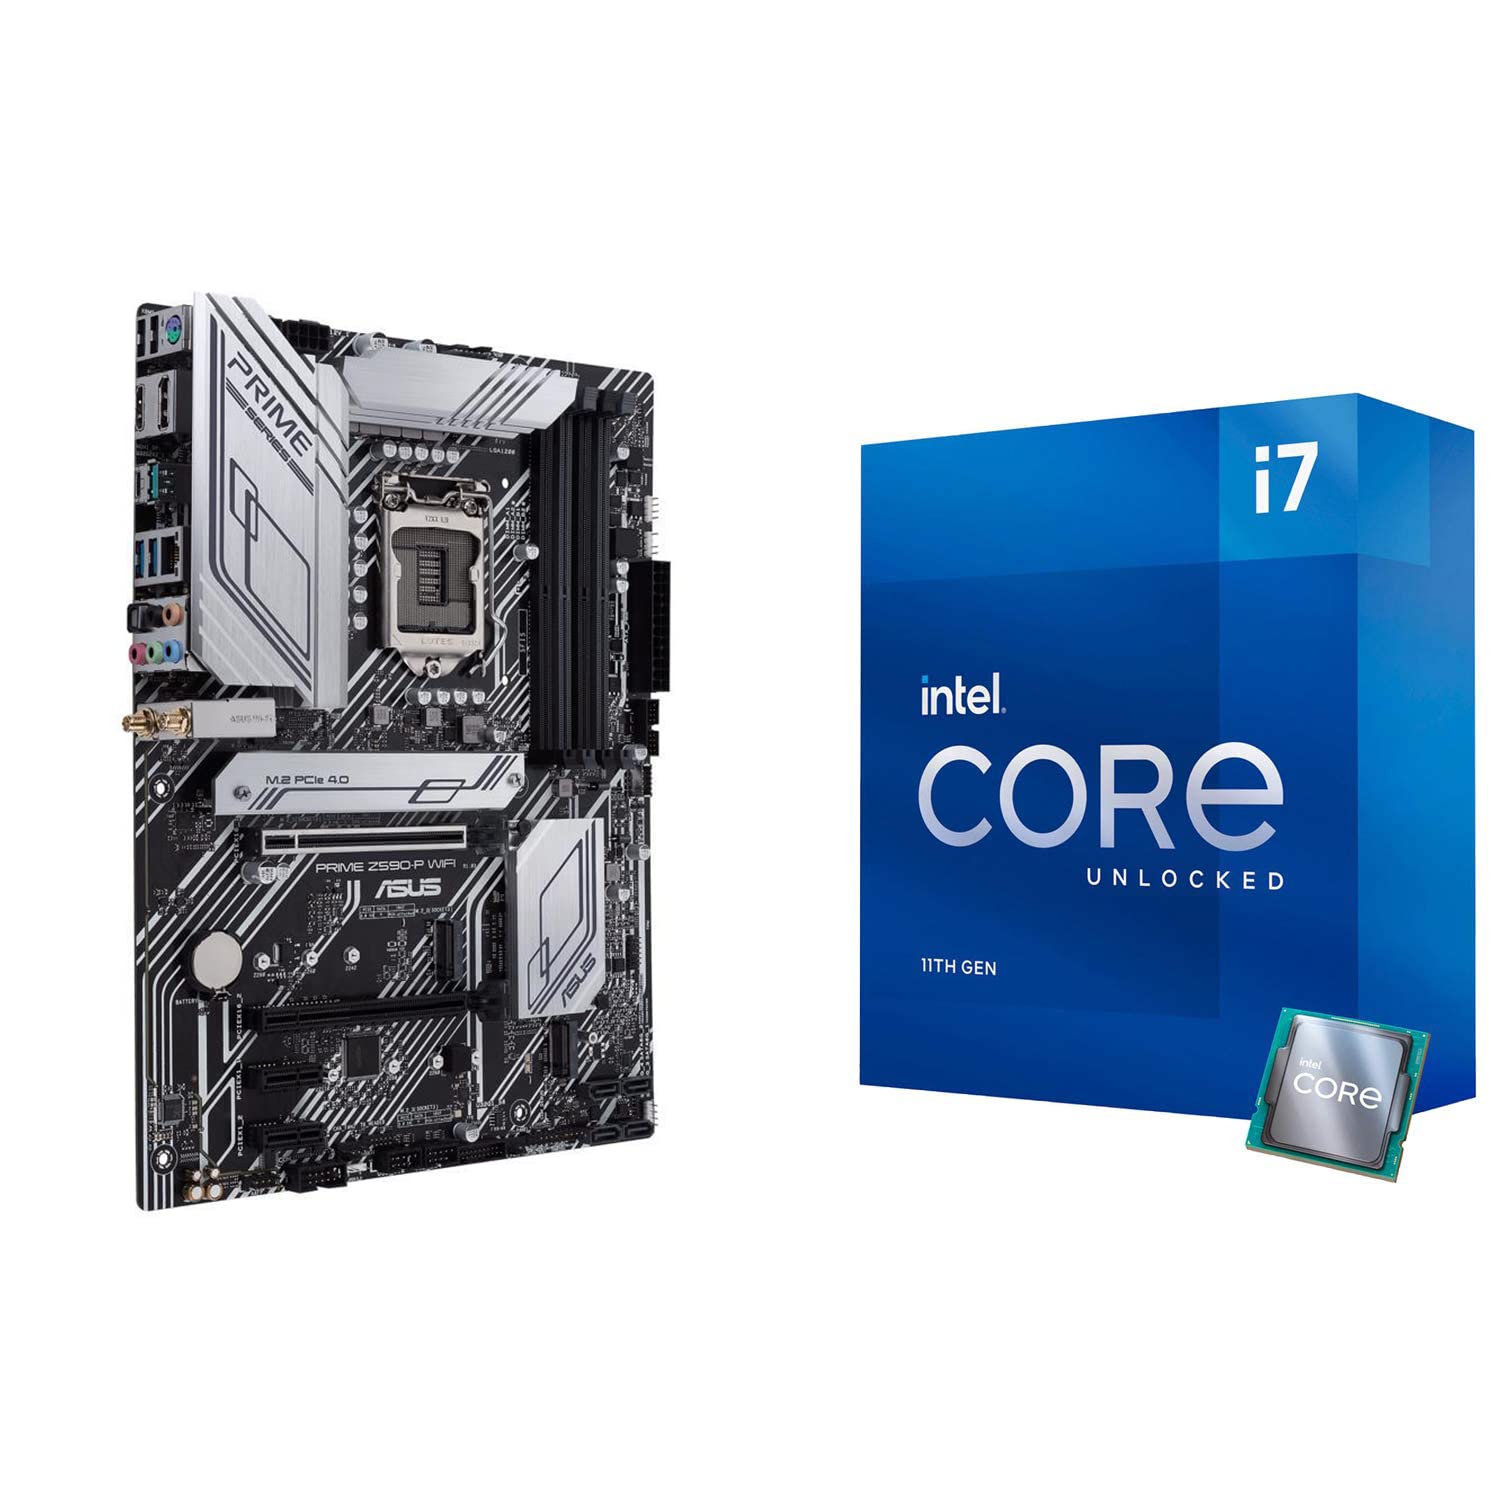 Intel Core i9-11900K CPU & MSI MPG Z590 Gaming Force Motherboard Bundle, Intel & MSI, Intel & ASUS Bundles $439.99 + Free Shipping